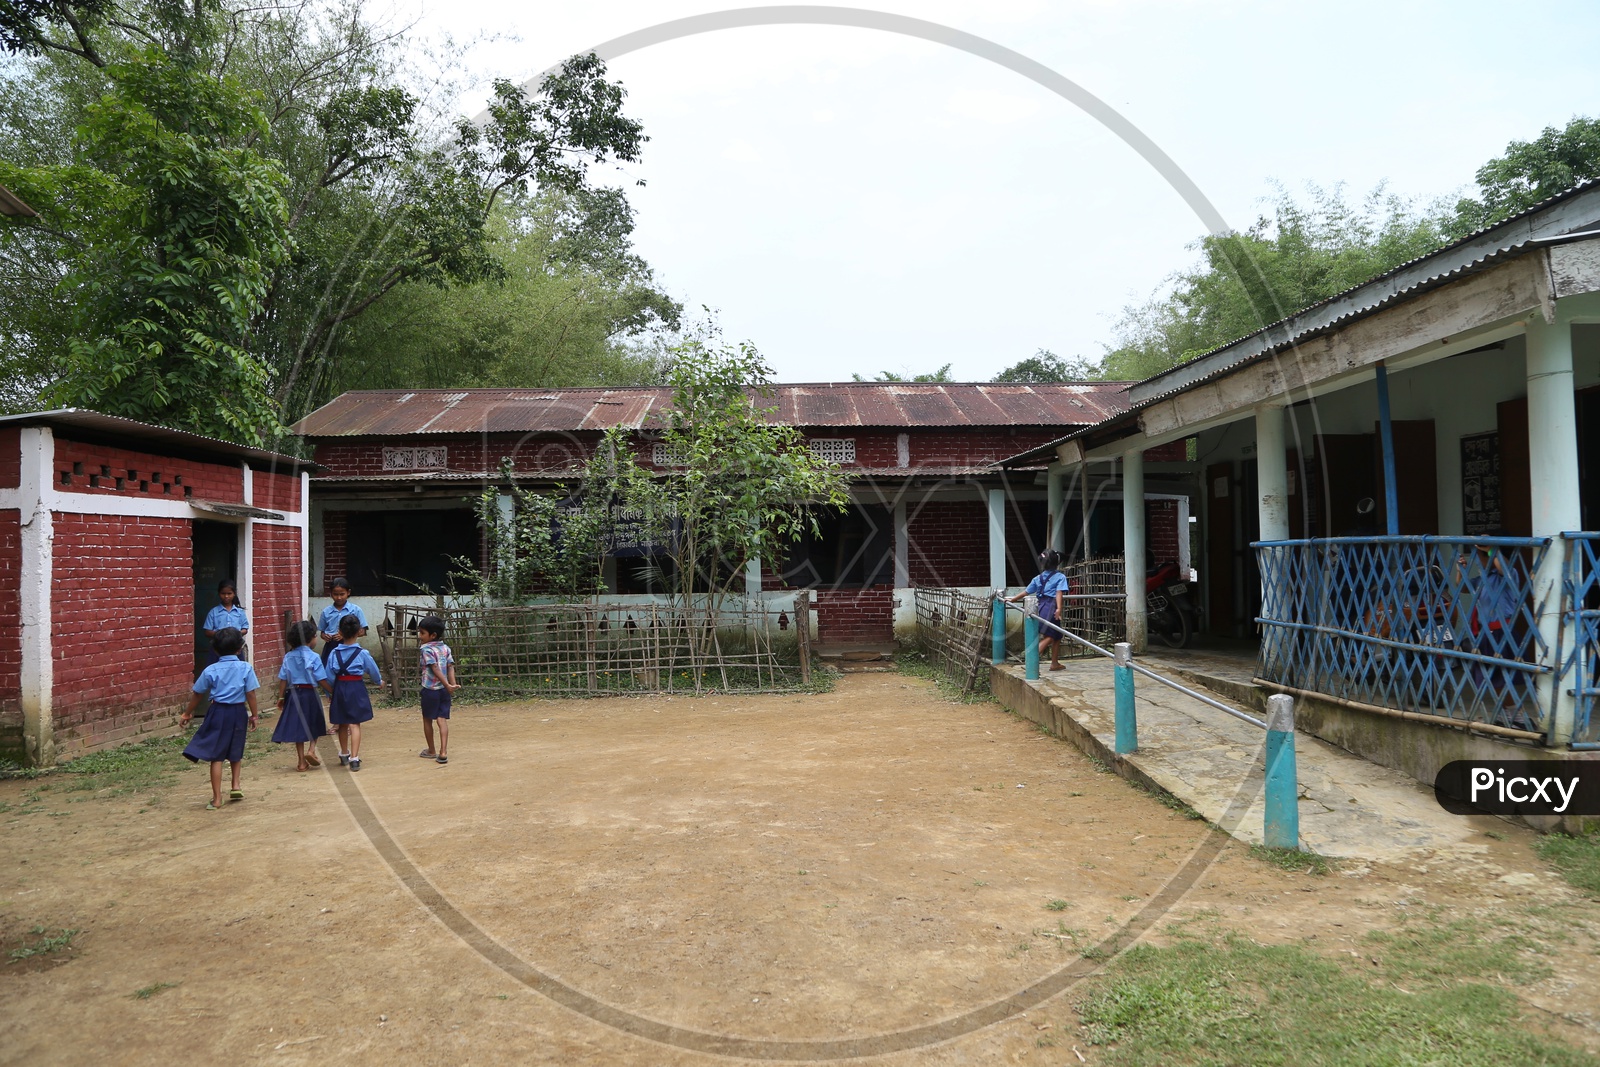 School Children Or Students in a Rural Village School